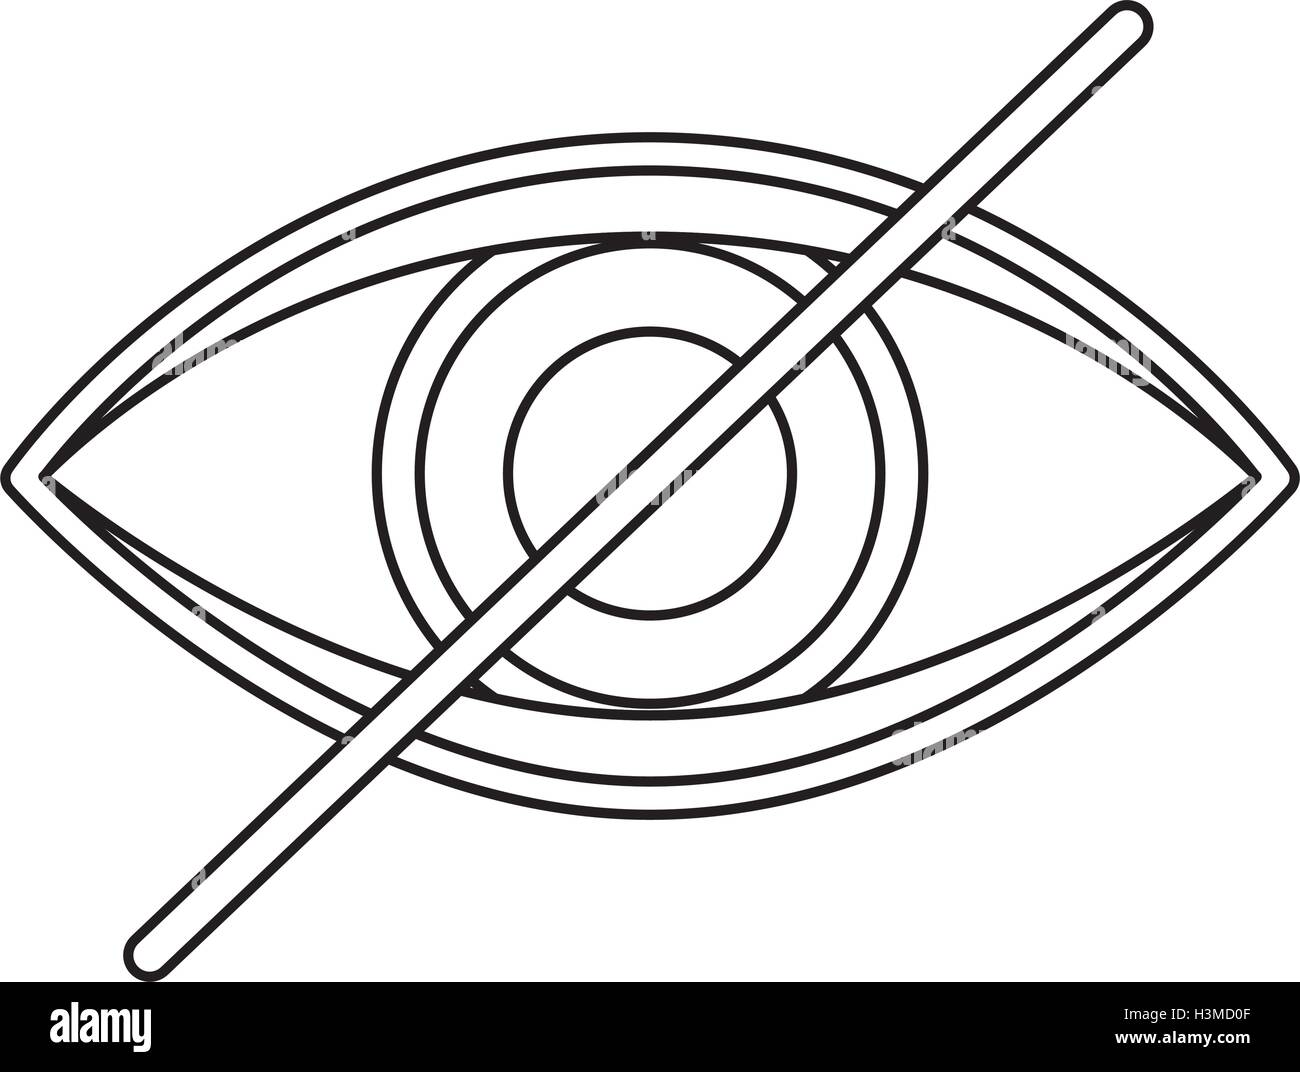 Isolated eye of blind people design Stock Vector Image & Art - Alamy